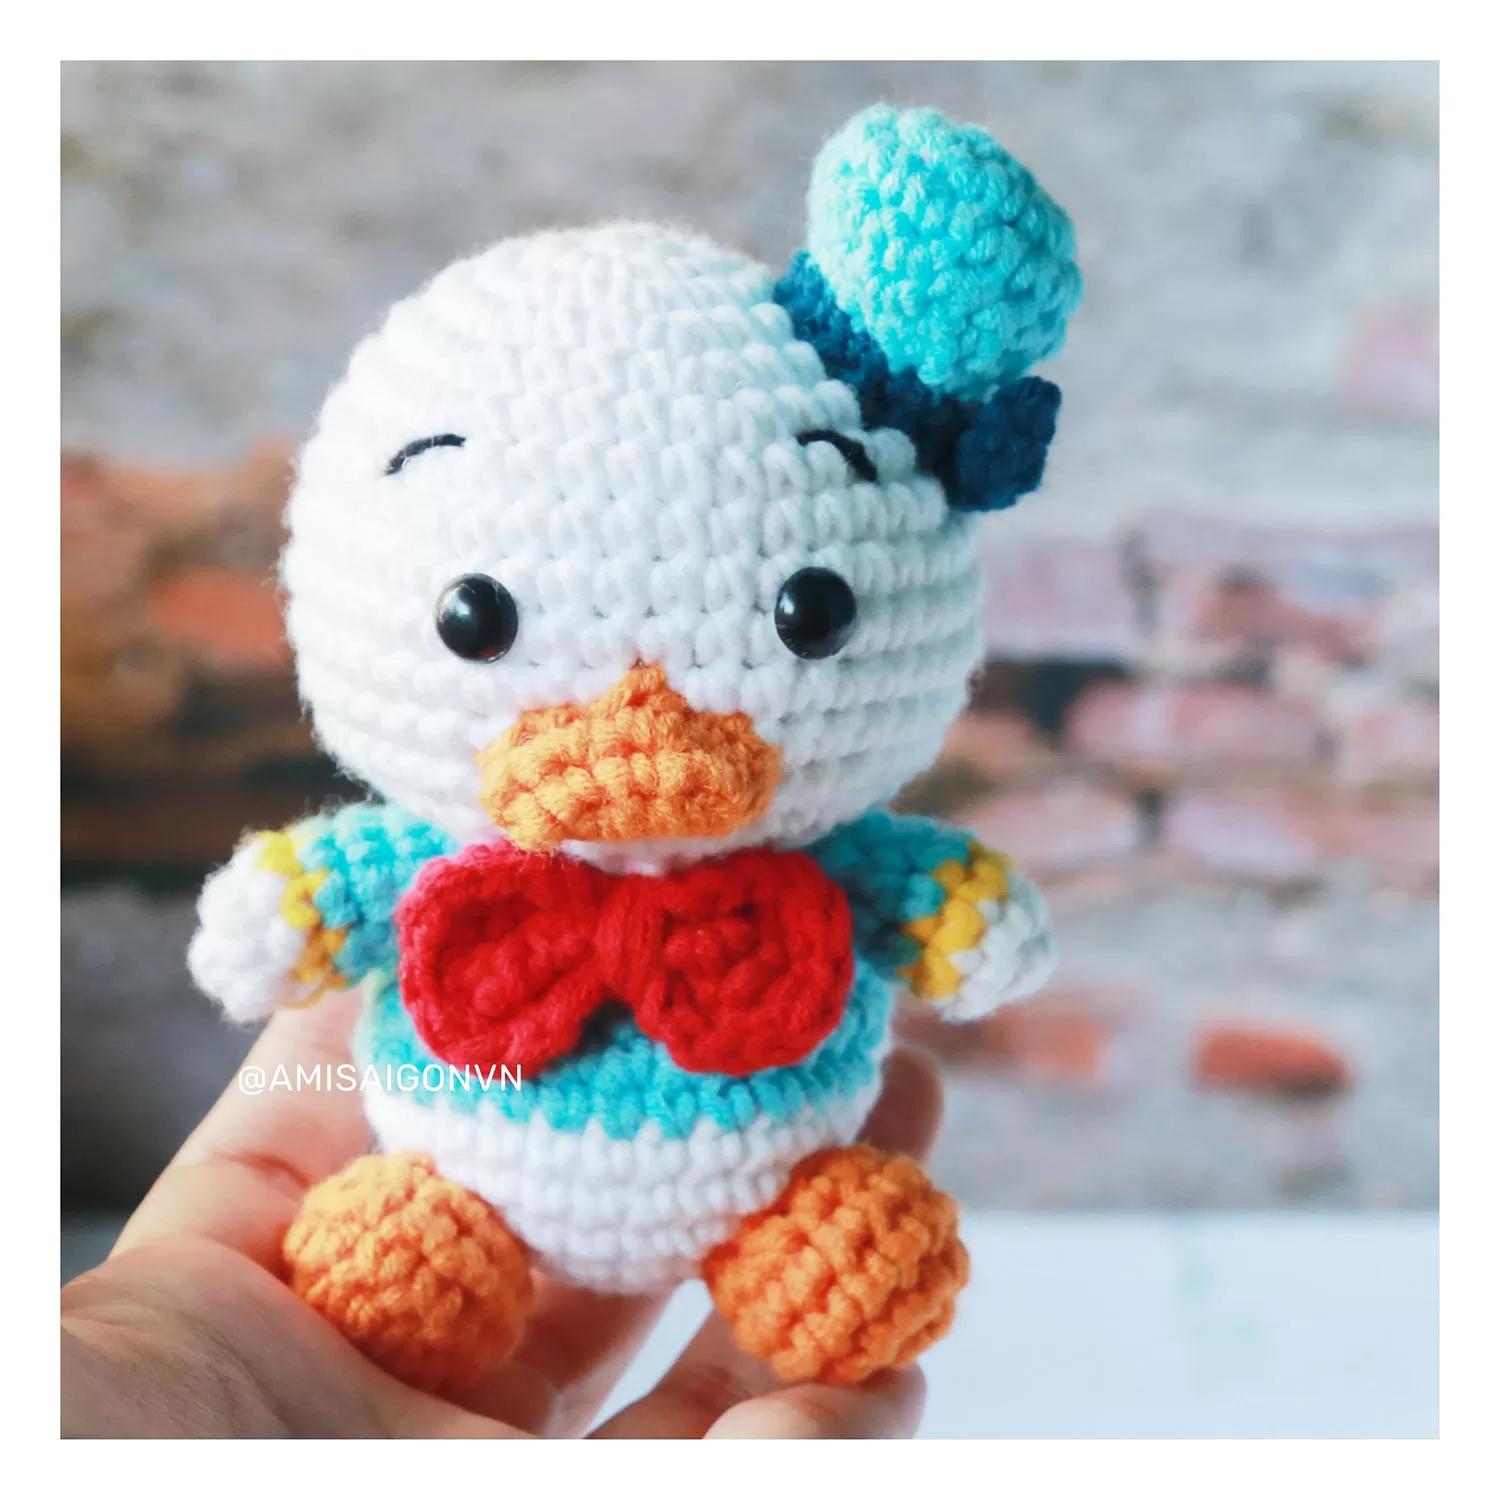 Donald Duck Amigurumi | Crochet Pattern | Amigurumi Tutorial PDF in English | AmiSaigon